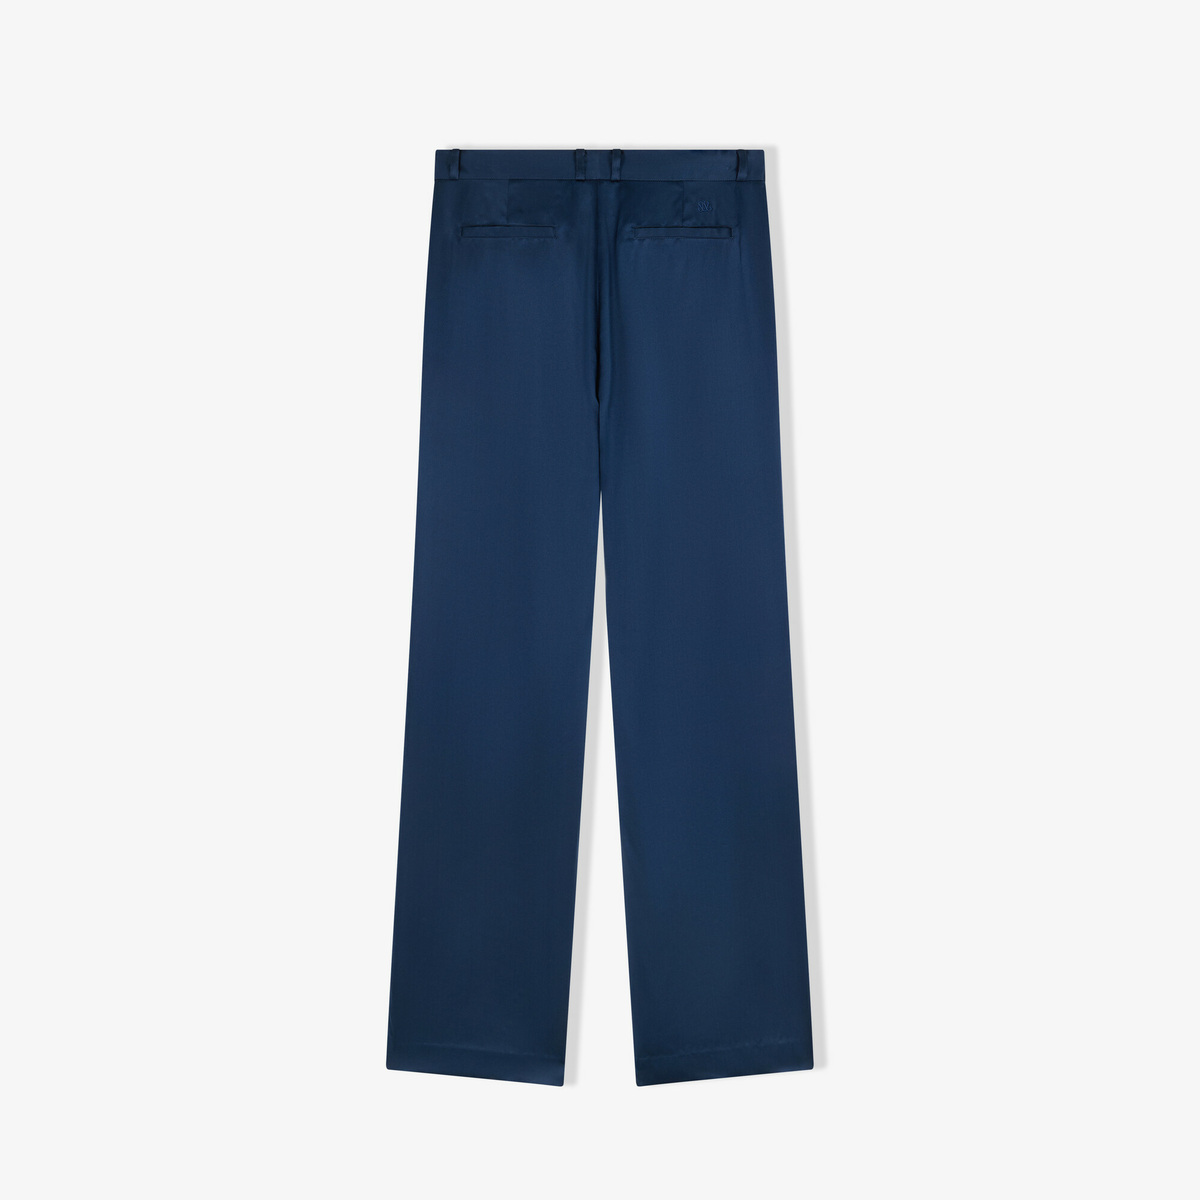 Segur Straight Pants, Broadway Blue - Silk - image 2